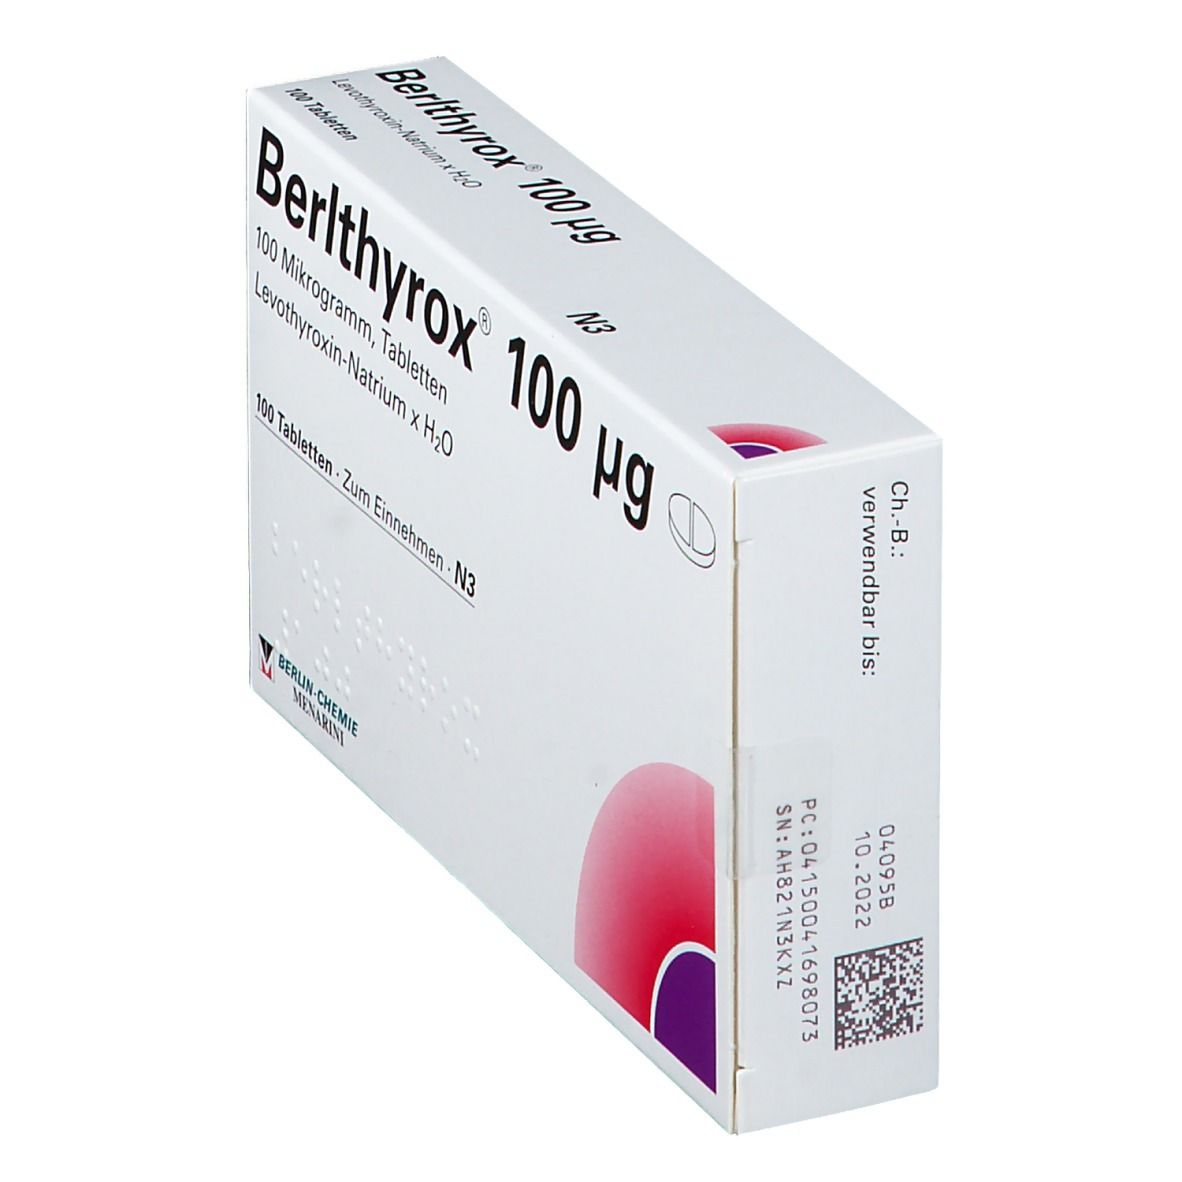 Berlthyrox® 100 µg